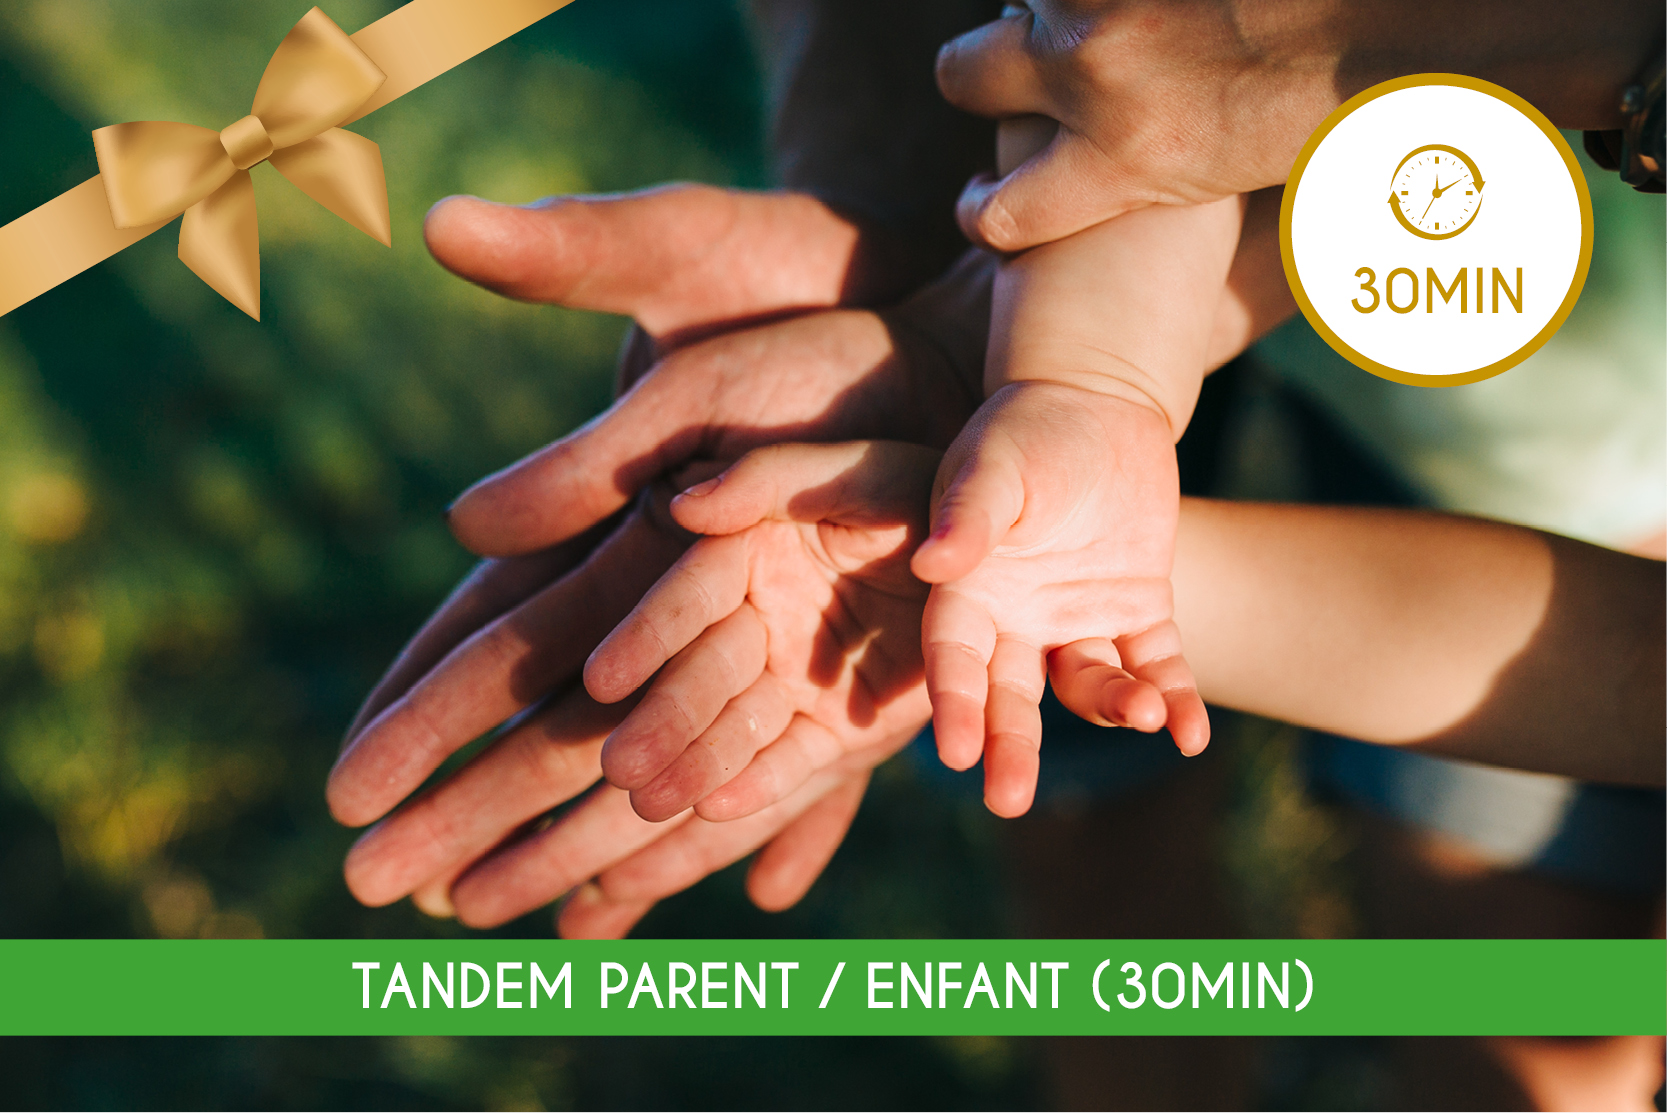 TANDEM PARENT / ENFANT (30MIN)